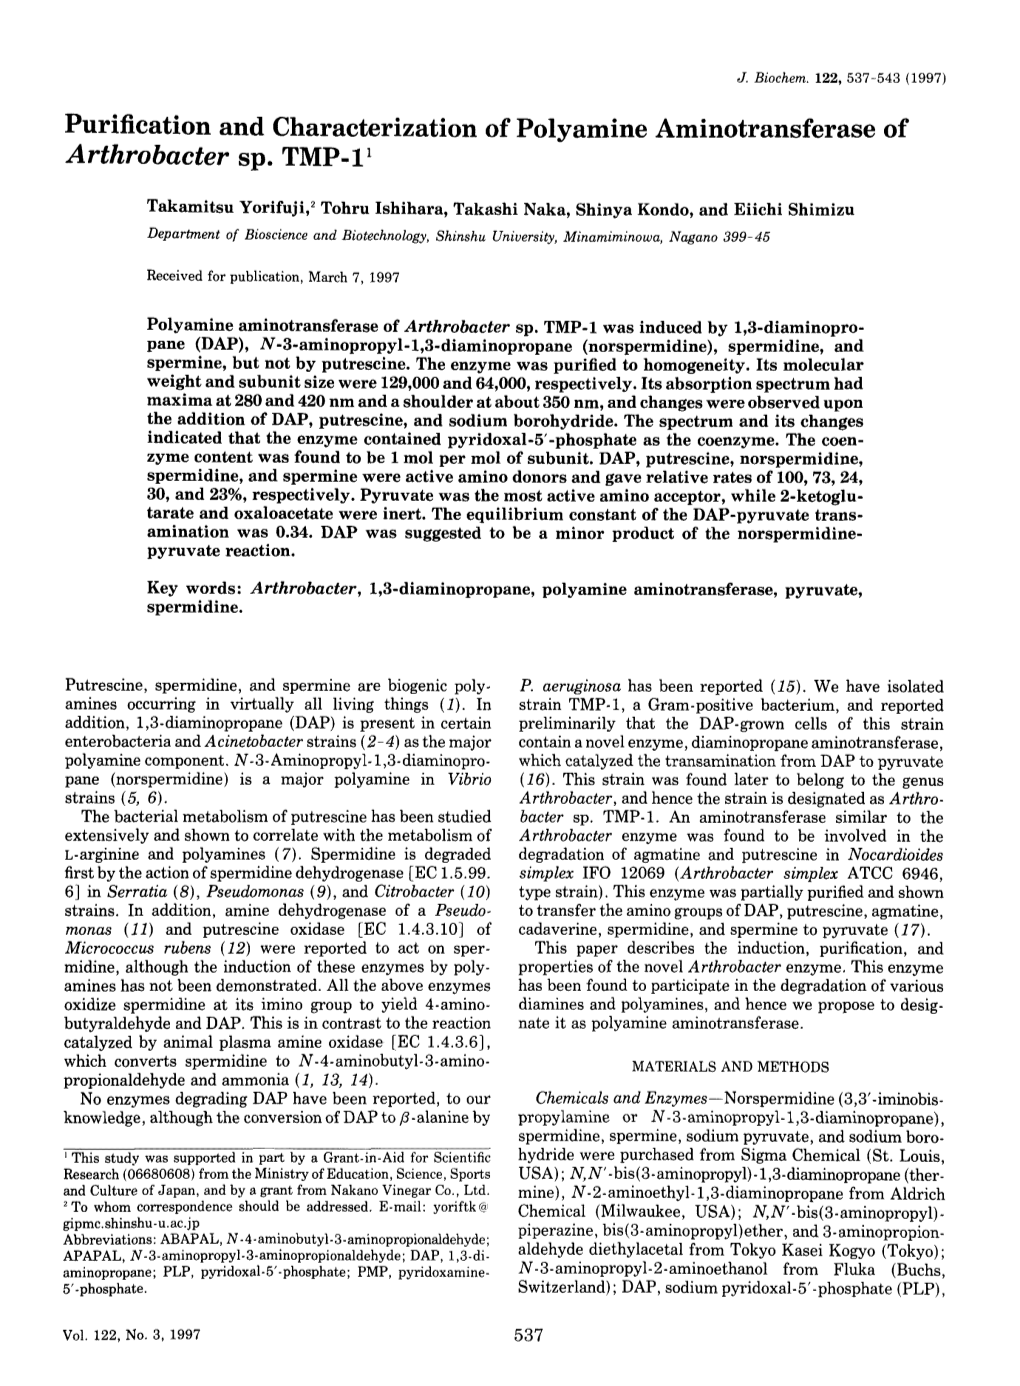 Purification and Characterization of Polyamine Aminotransferase of Arthrobacter Sp